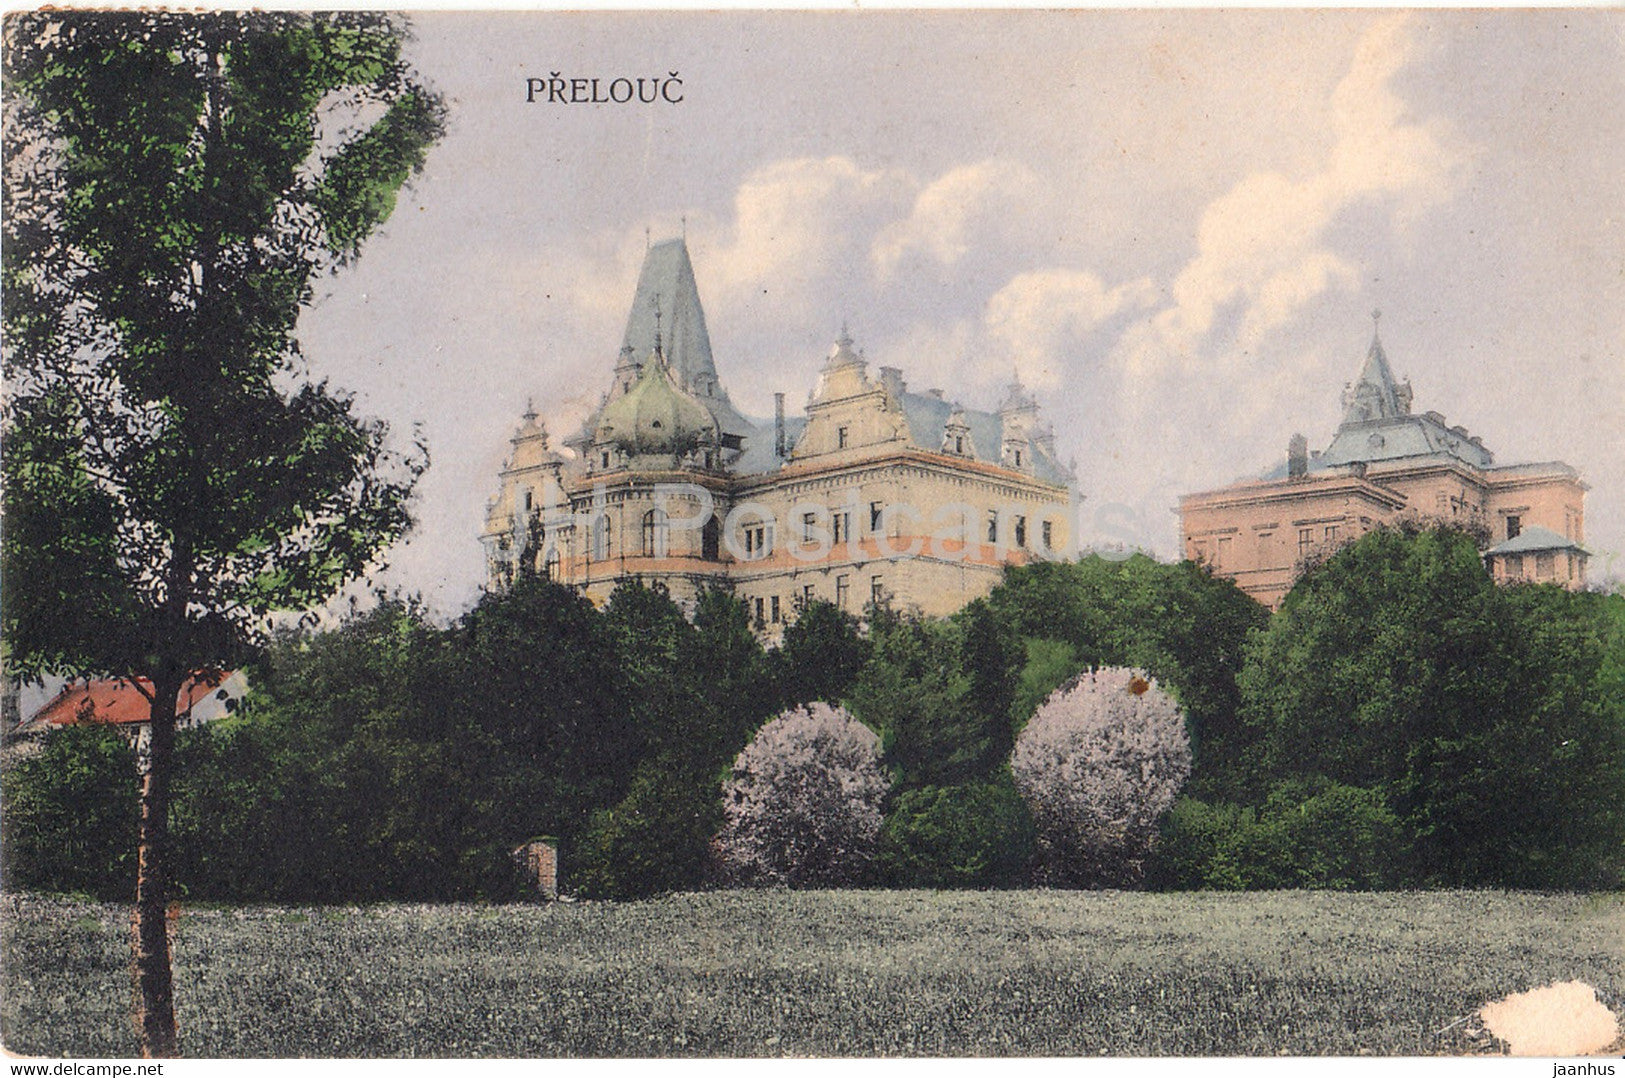 Prelouc - old postcard - 1910 - Czech Republic - used - JH Postcards